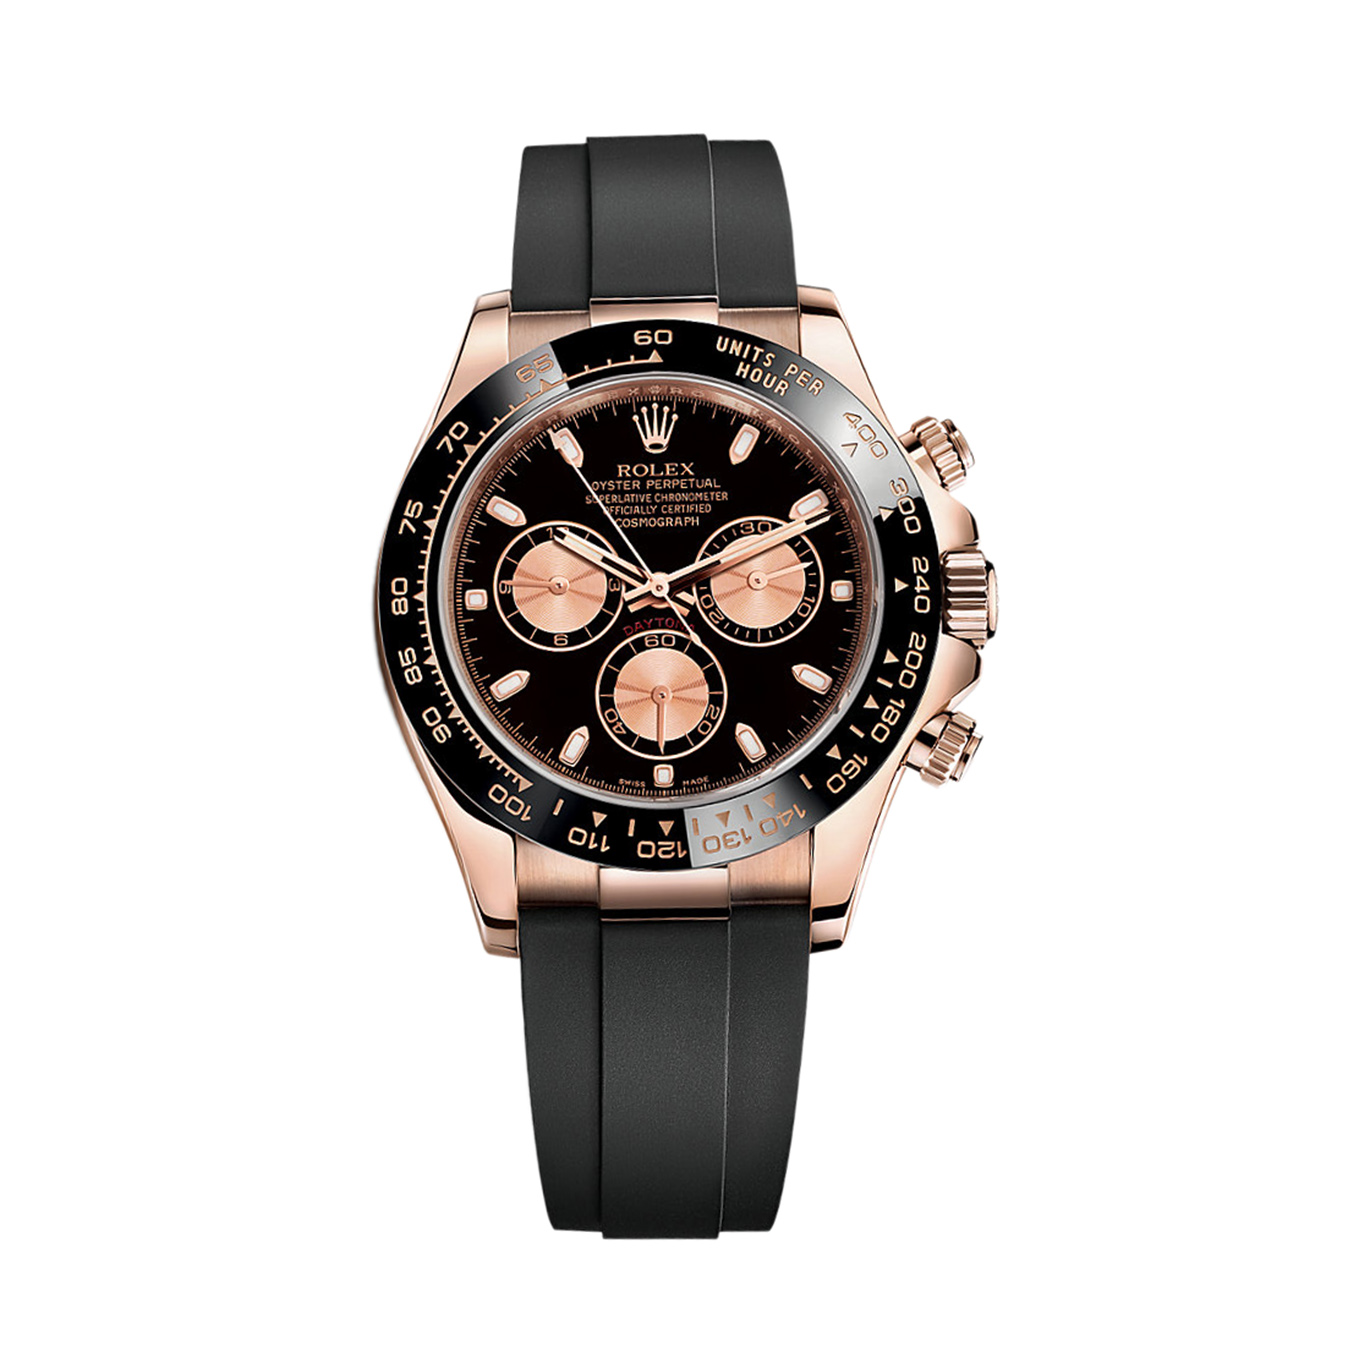 Cosmograph Daytona 116515LN Rose Gold Watch (Black & Pink)